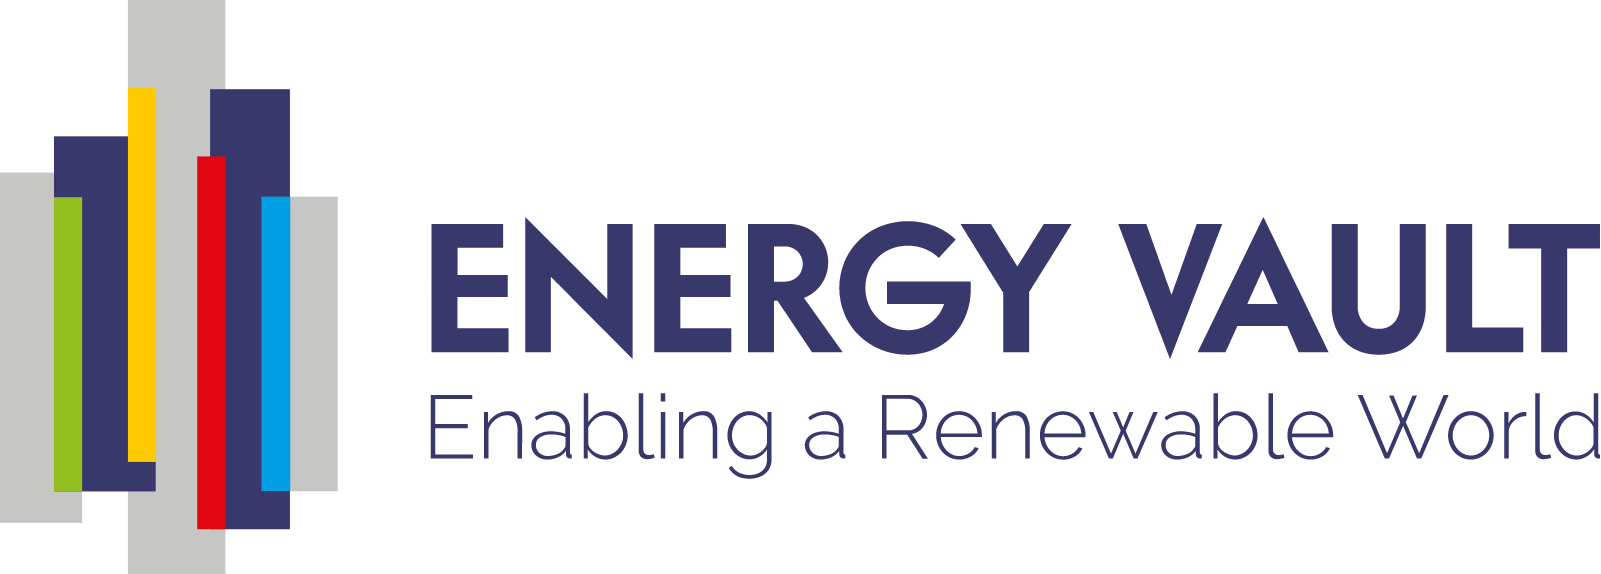 Energy Vault logo large (transparent PNG)